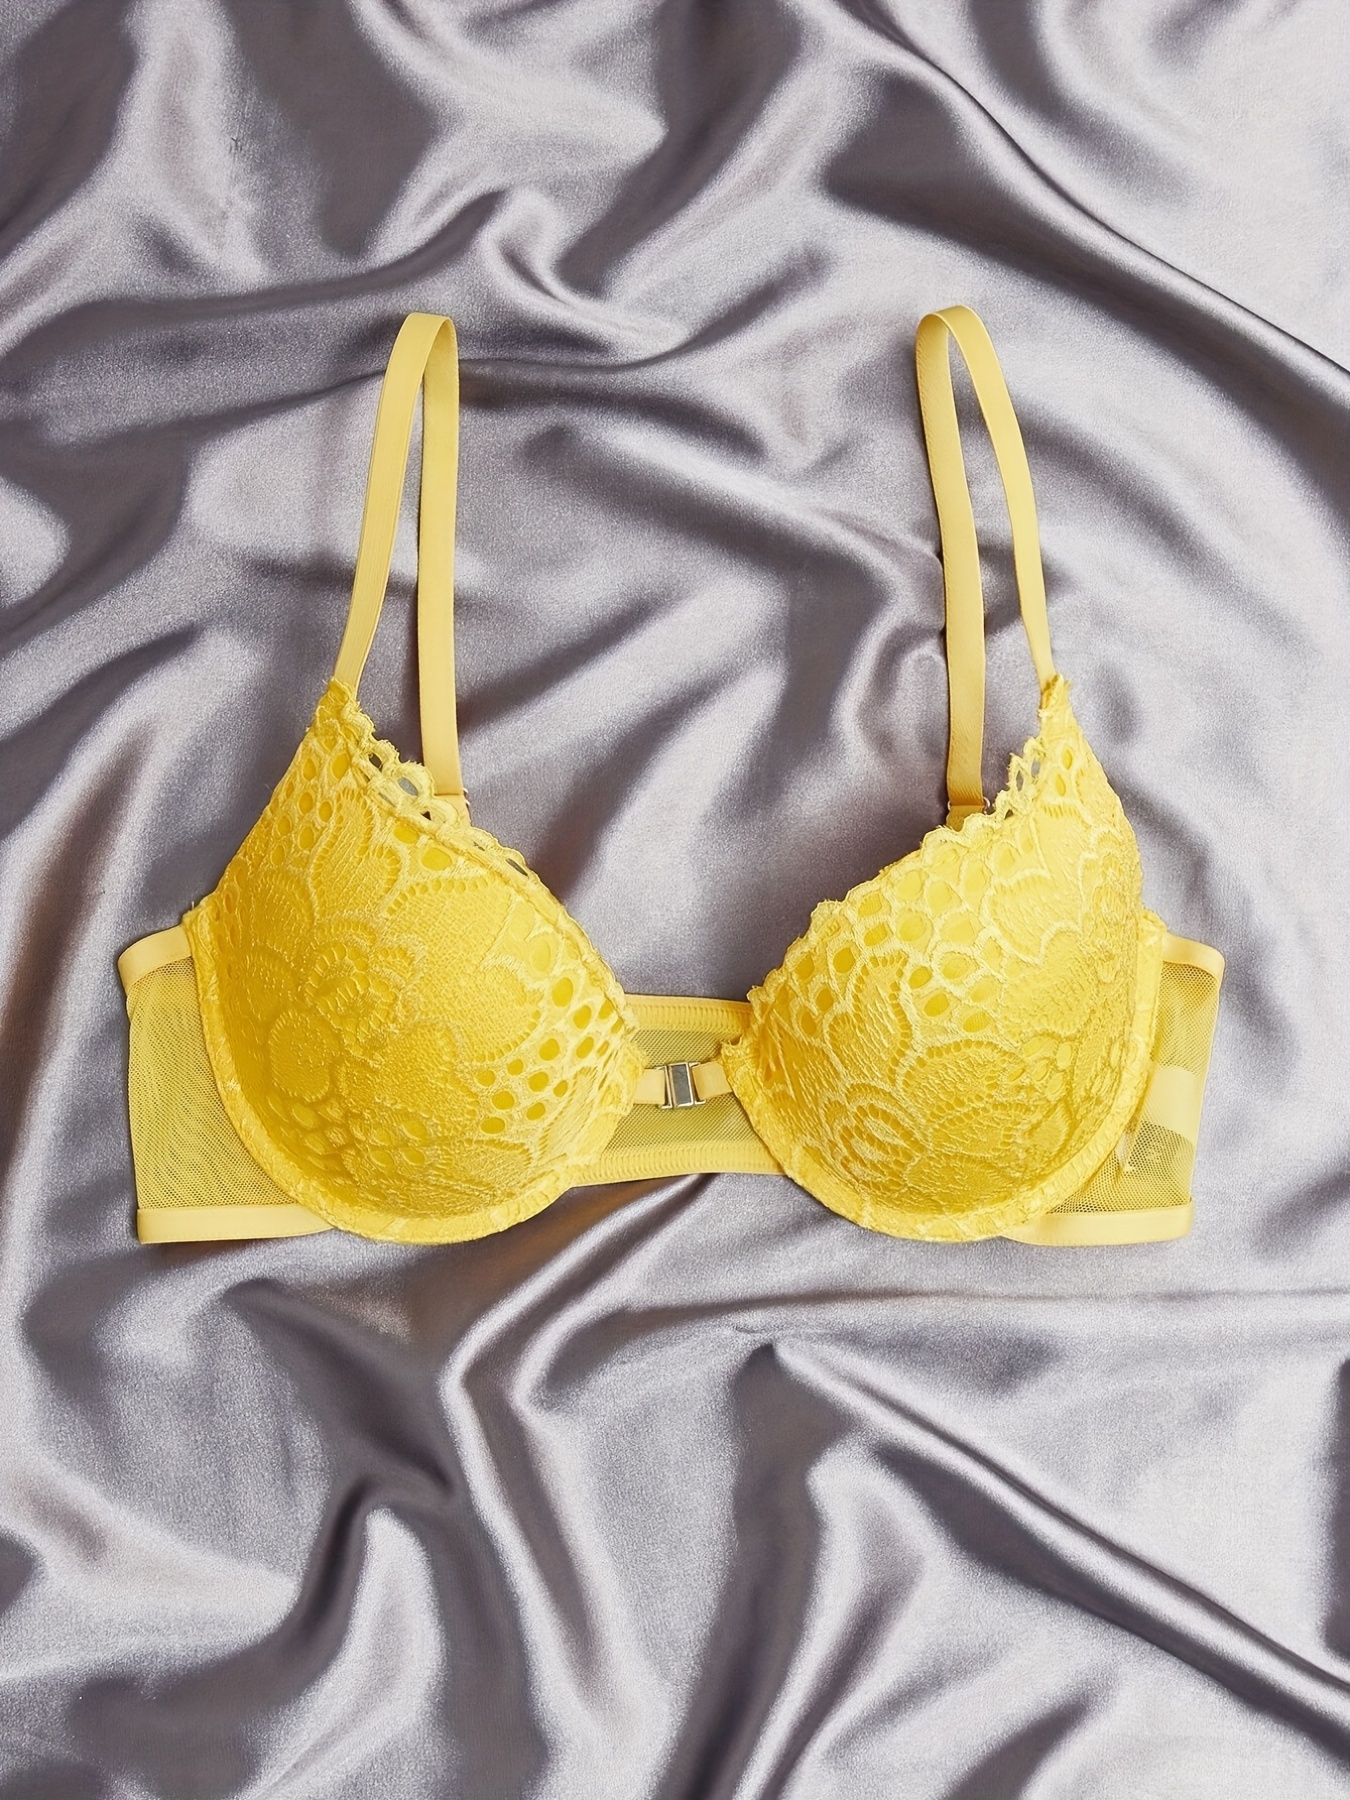 Women'secret Gorgeous Yellow Lace Push-Up Bra Yellow/Gold Women Bras